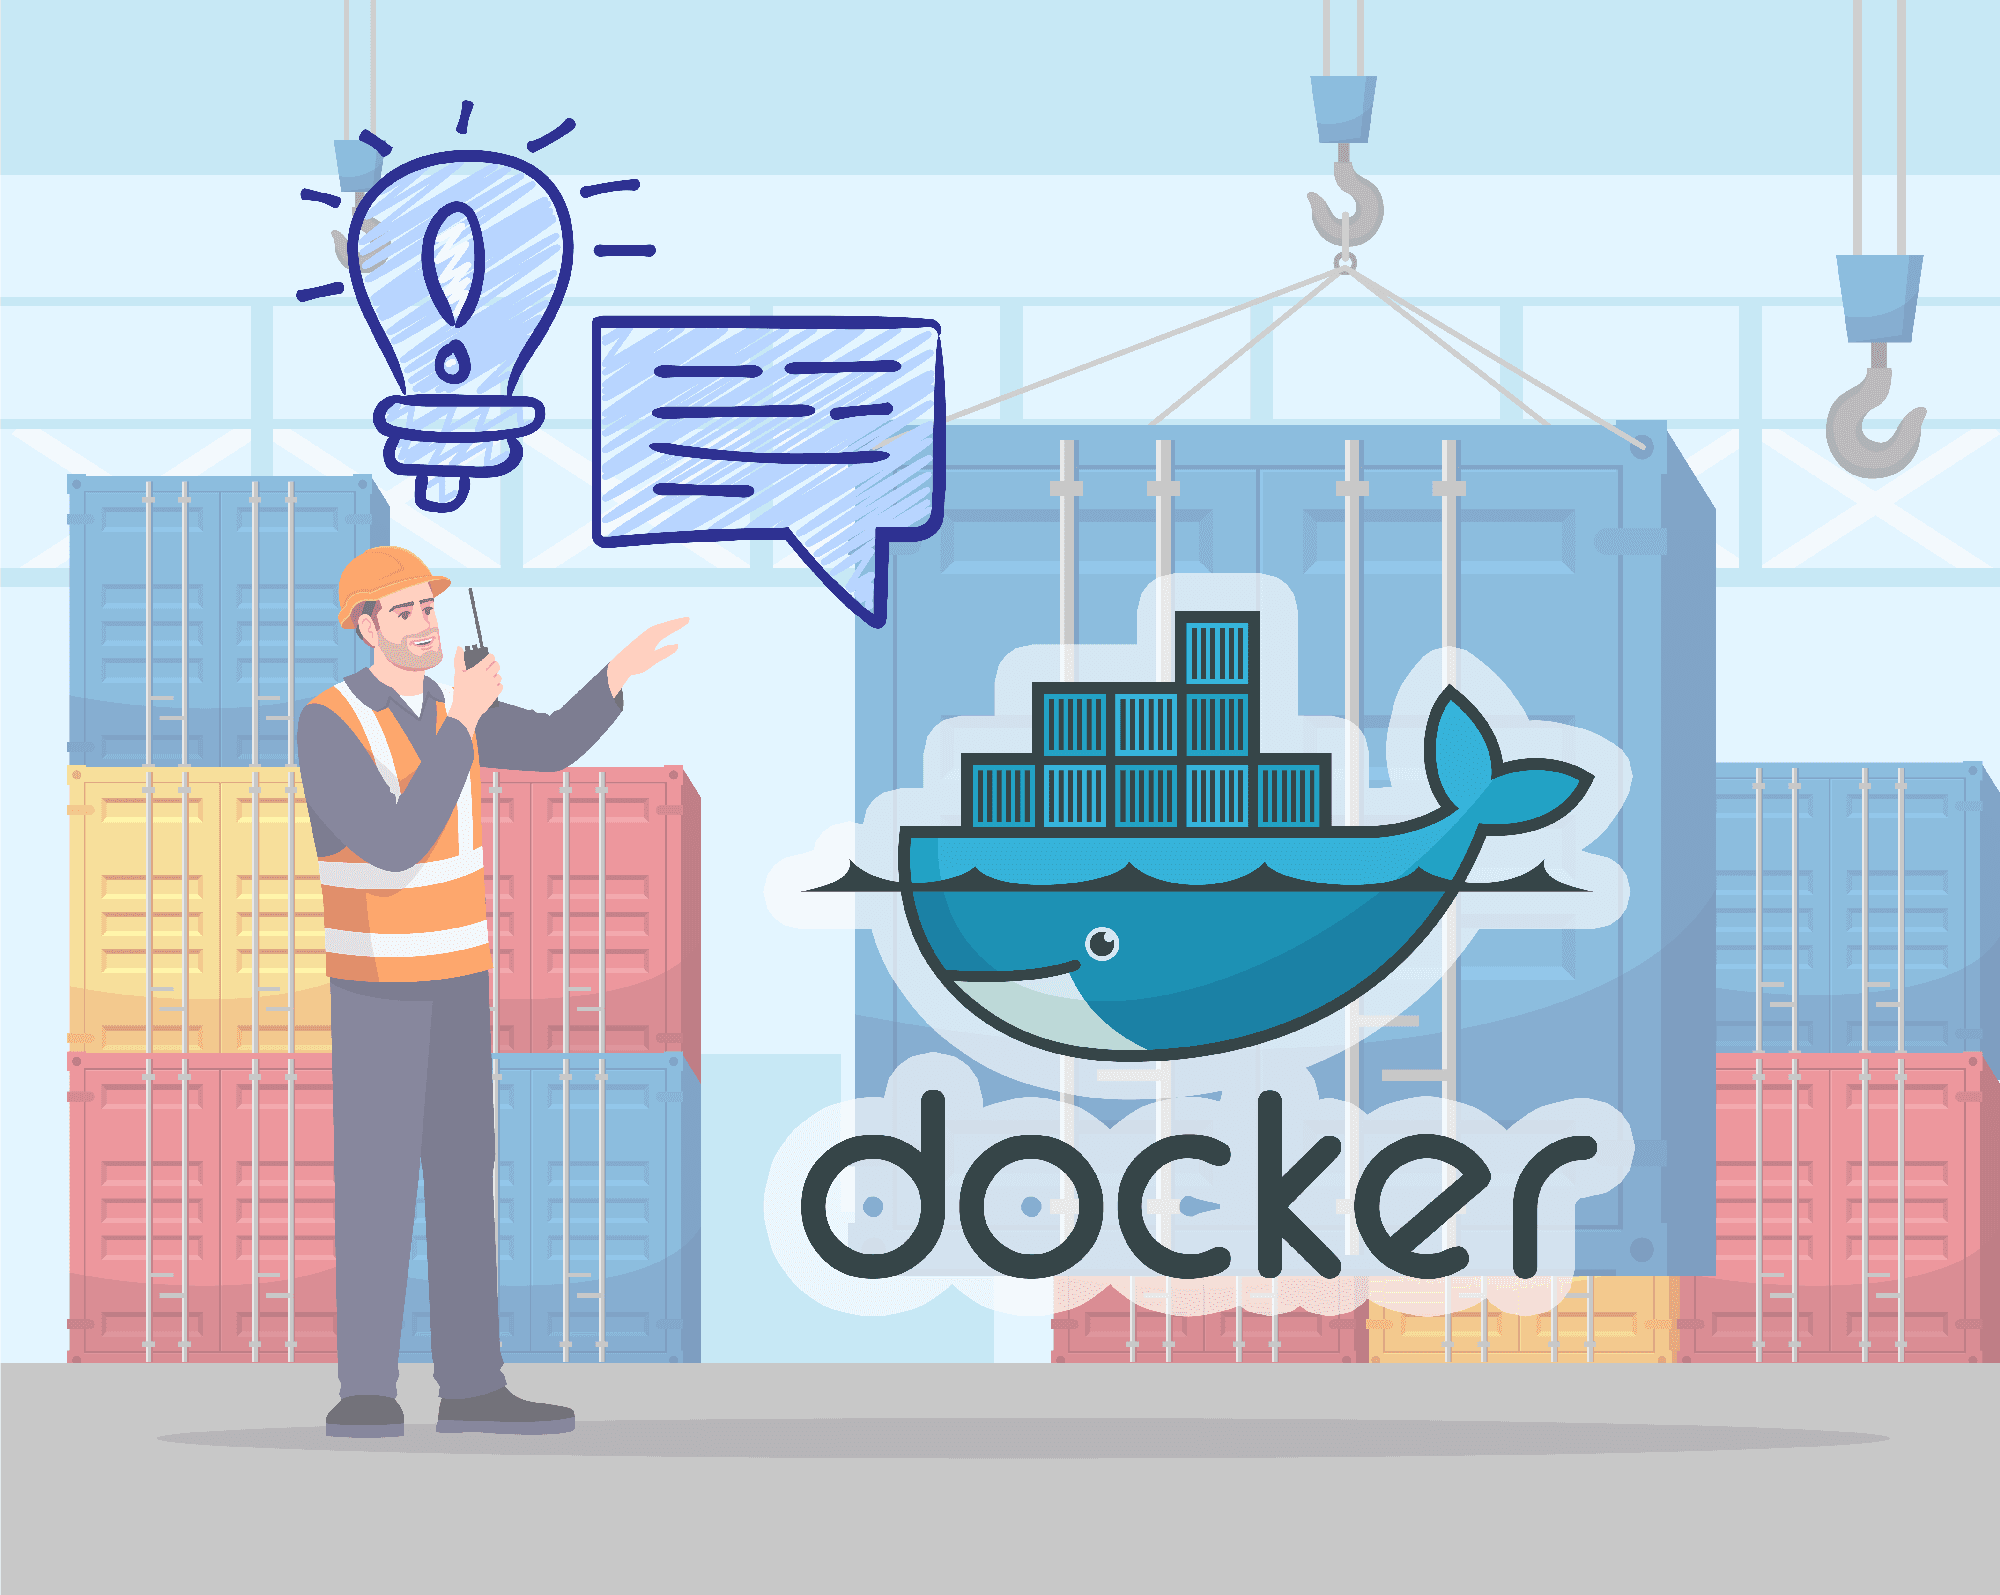 Docker RP tips - astuces